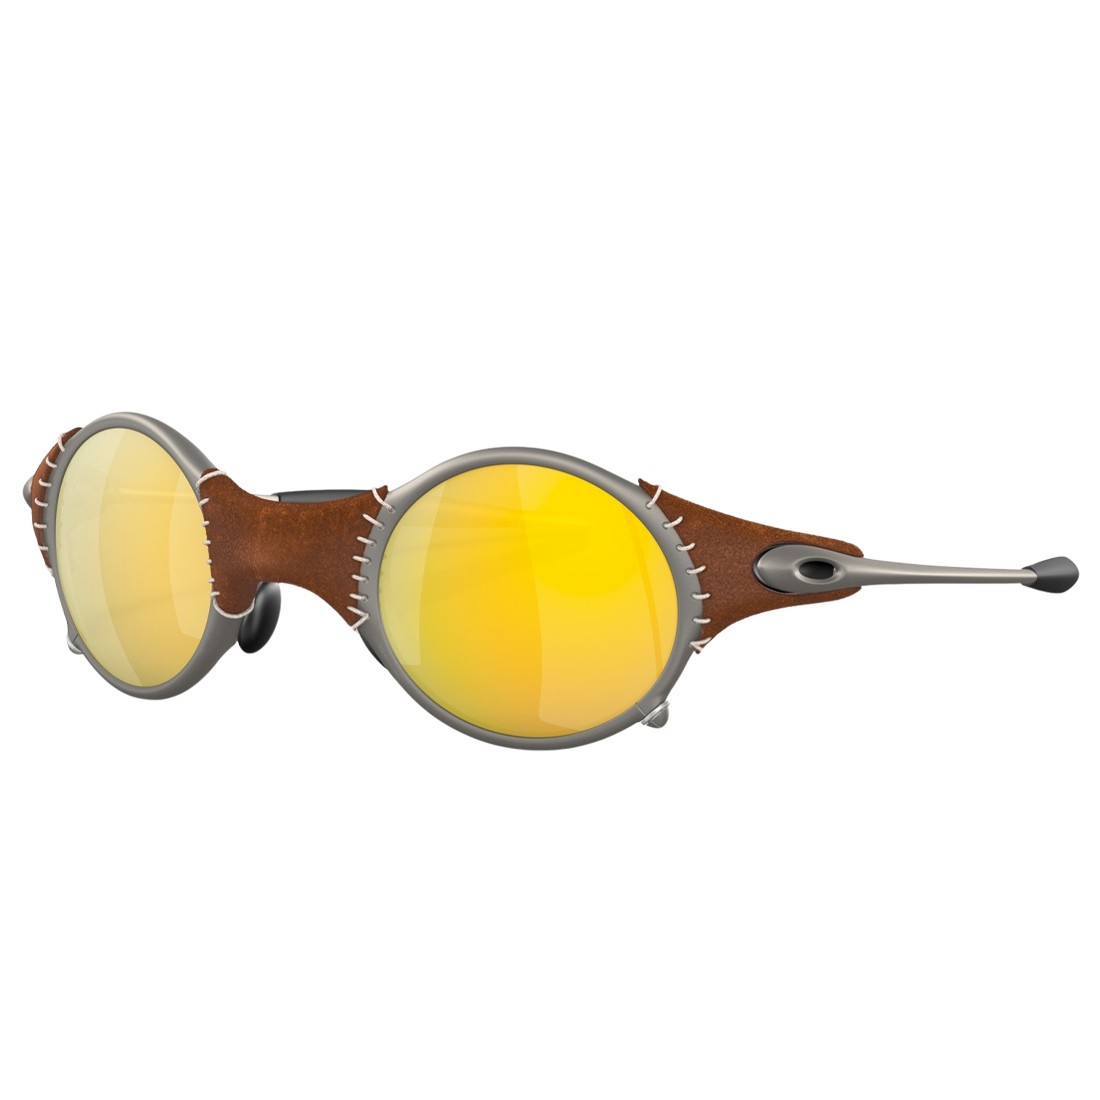 Ray-Ban Jackie Ohh II sunglasses